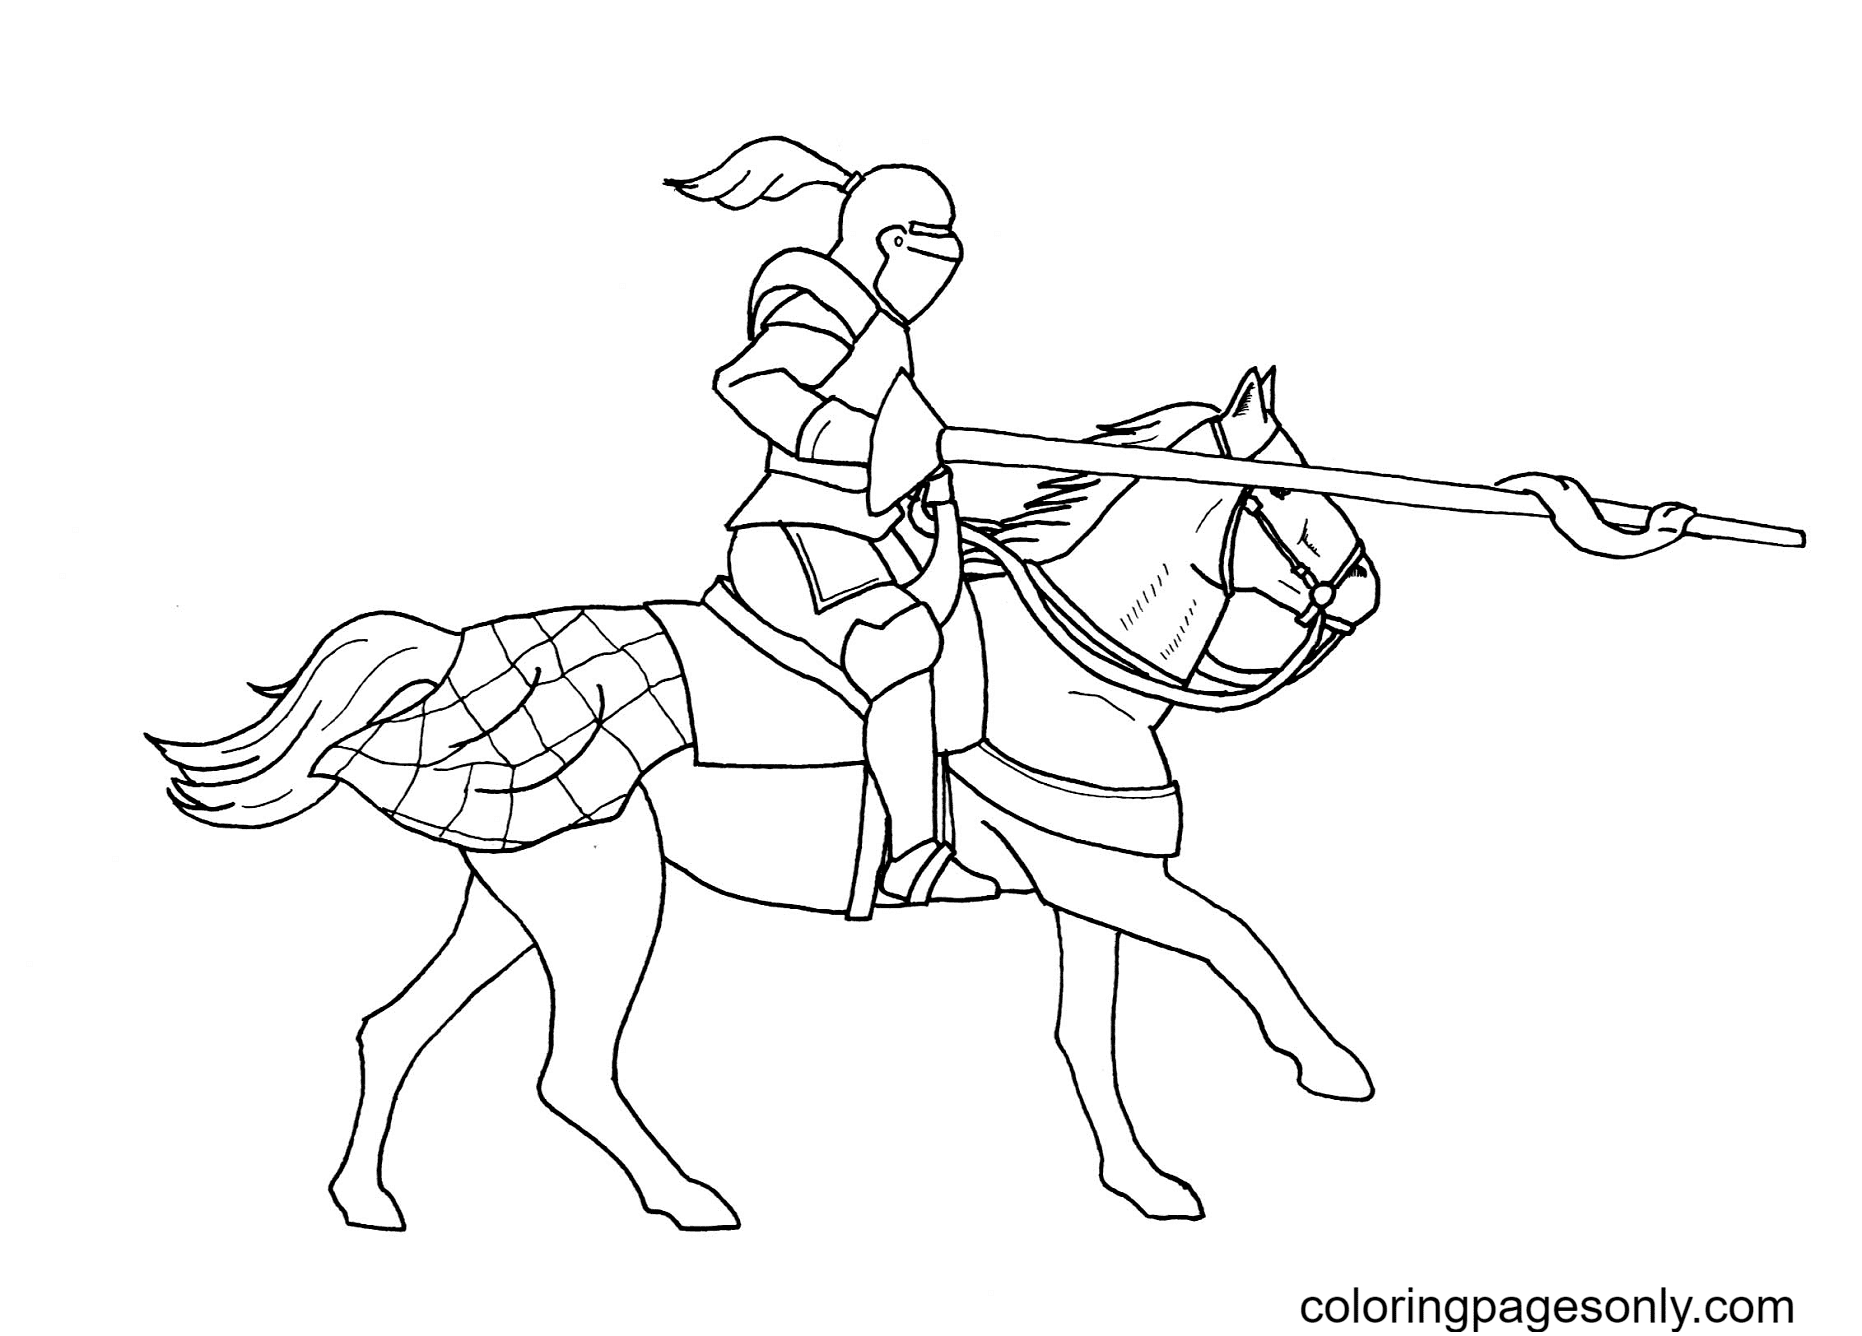 460 Drawing Of The Knights On Horseback Illustrations RoyaltyFree Vector  Graphics  Clip Art  iStock